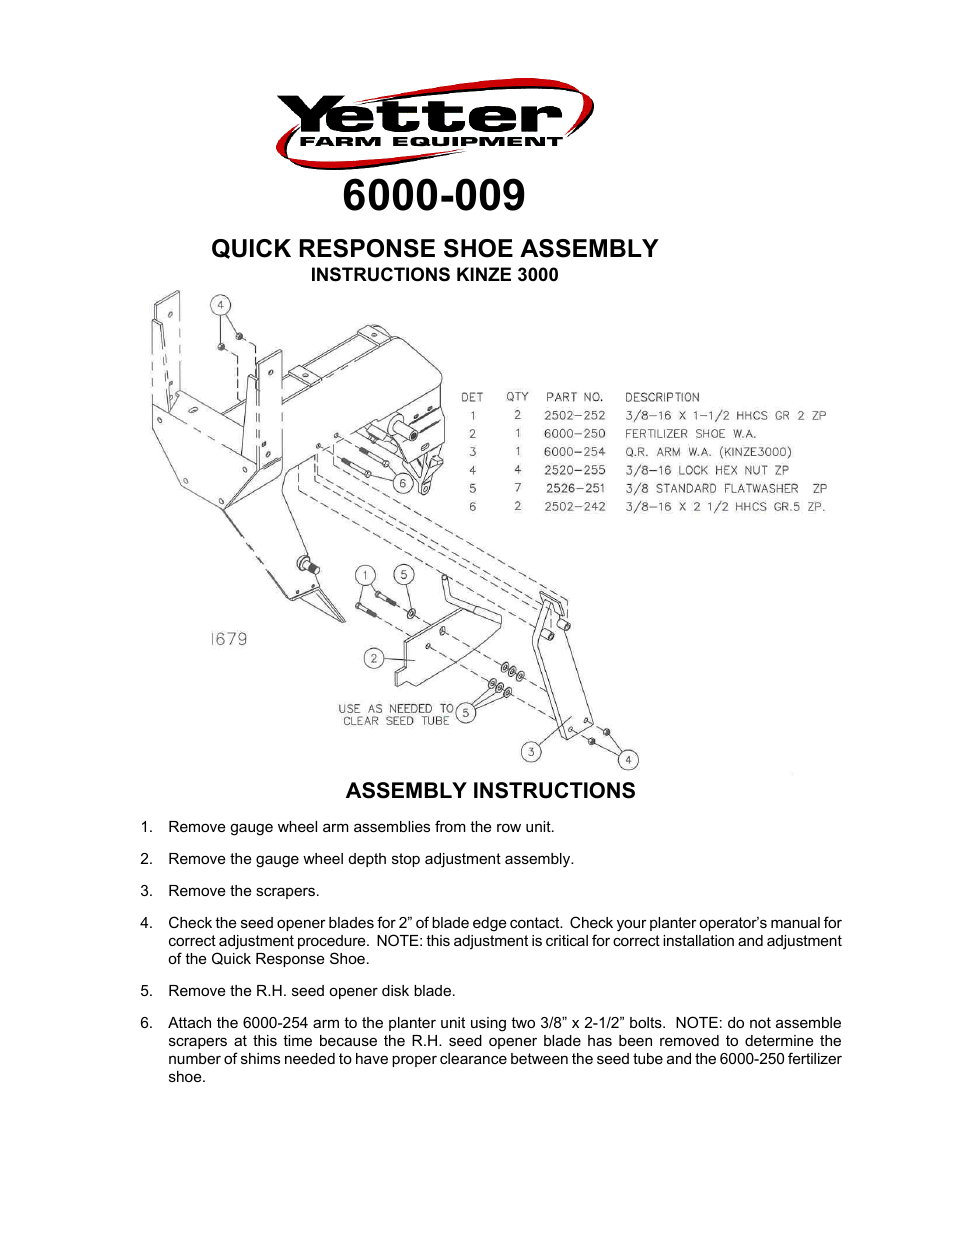 6000-009 Quick Response Shoe Assembly - Kinze 3000